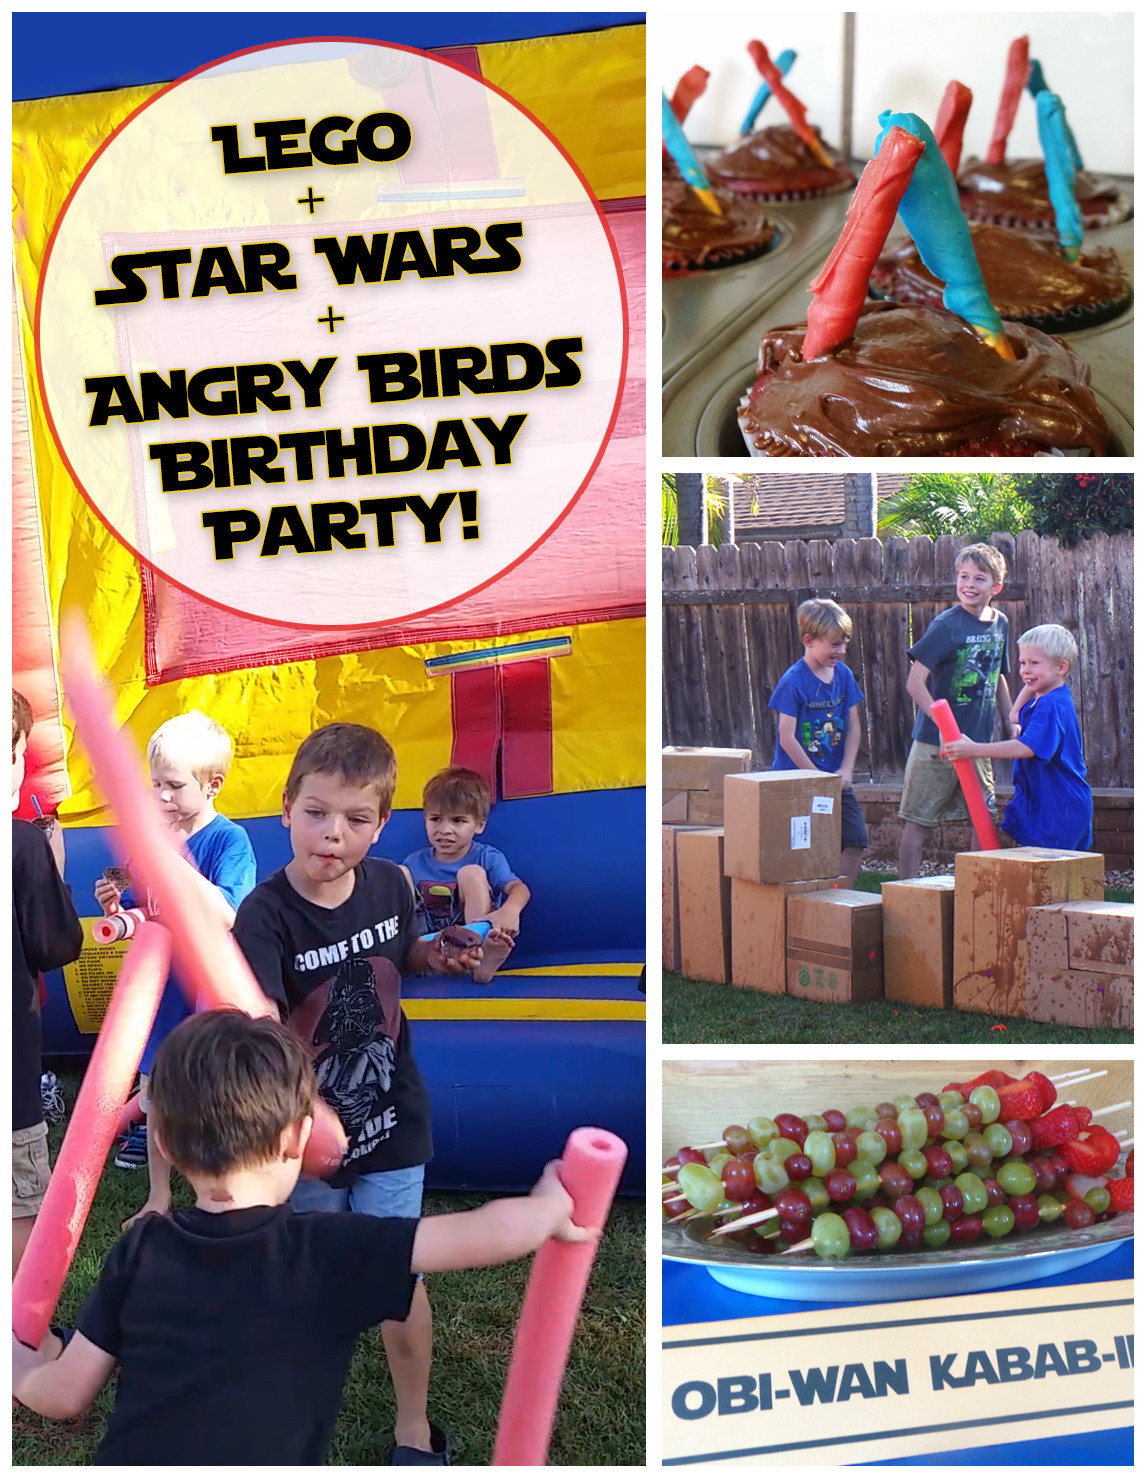 Lego Star Wars Birthday Party
 LEGO Star Wars Angry Birds Birthday Party